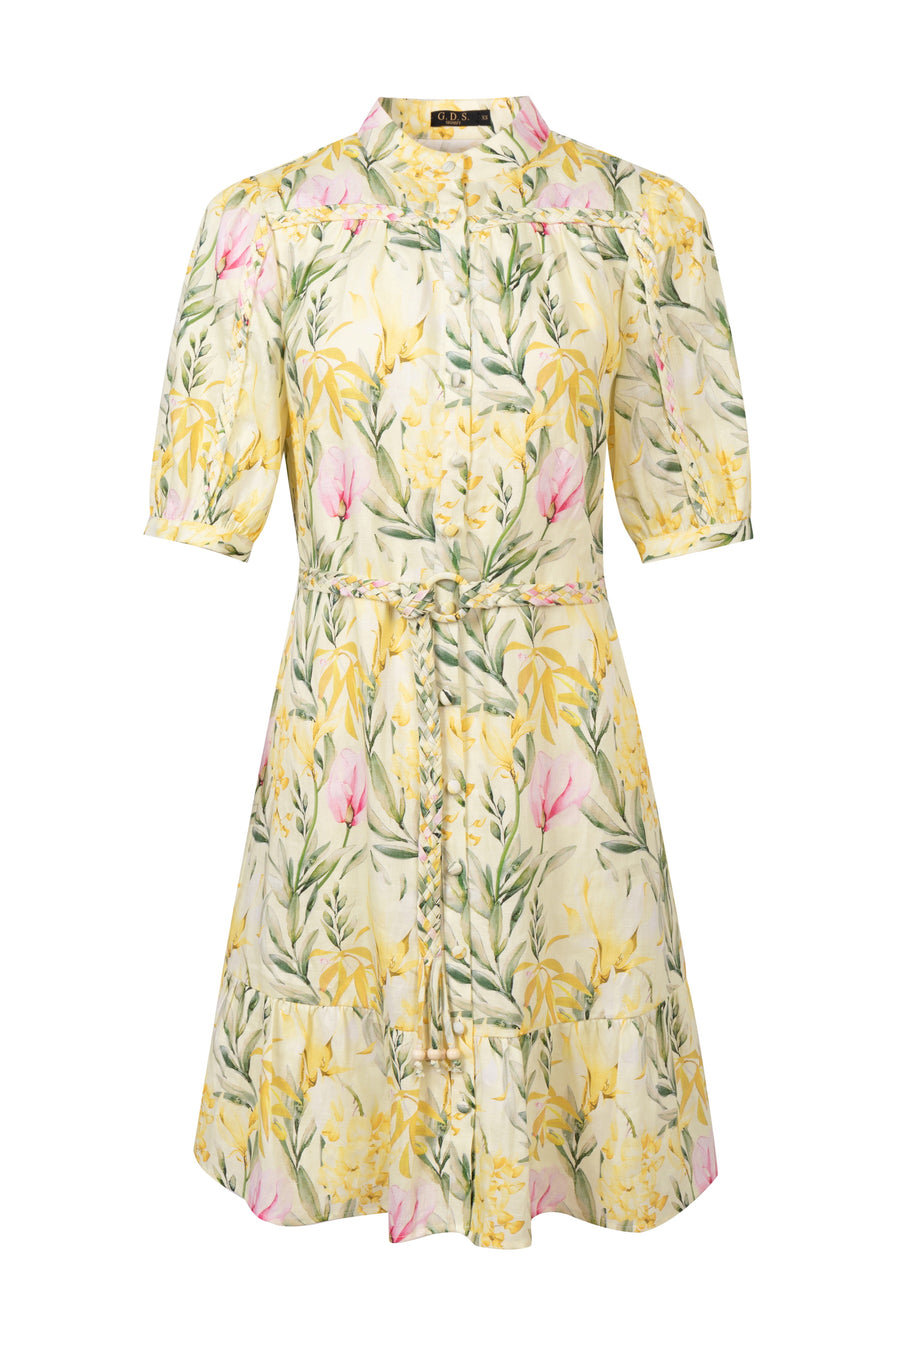 GDS Desiree Floral Linen Short Dress | Yellow DRESSES Catch GDS L M S SALE XL XS YELLOW